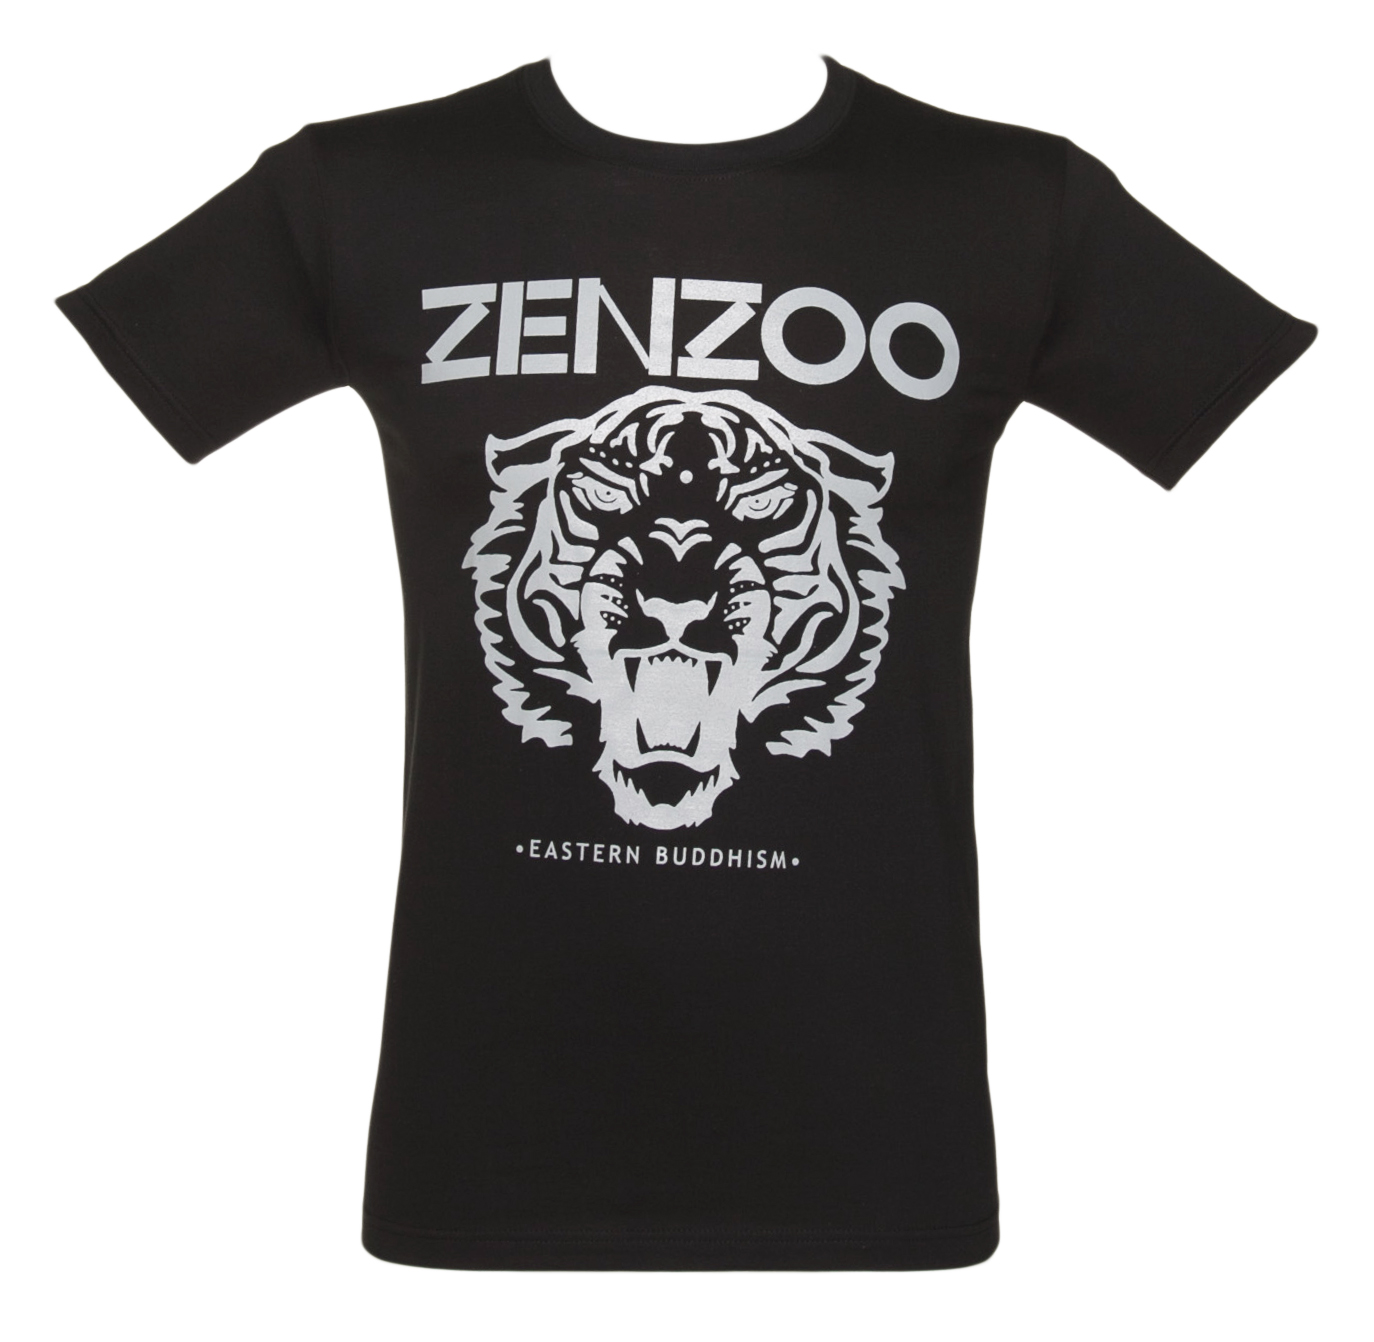 Mens Black Zenzoo Parody T-Shirt from Brand